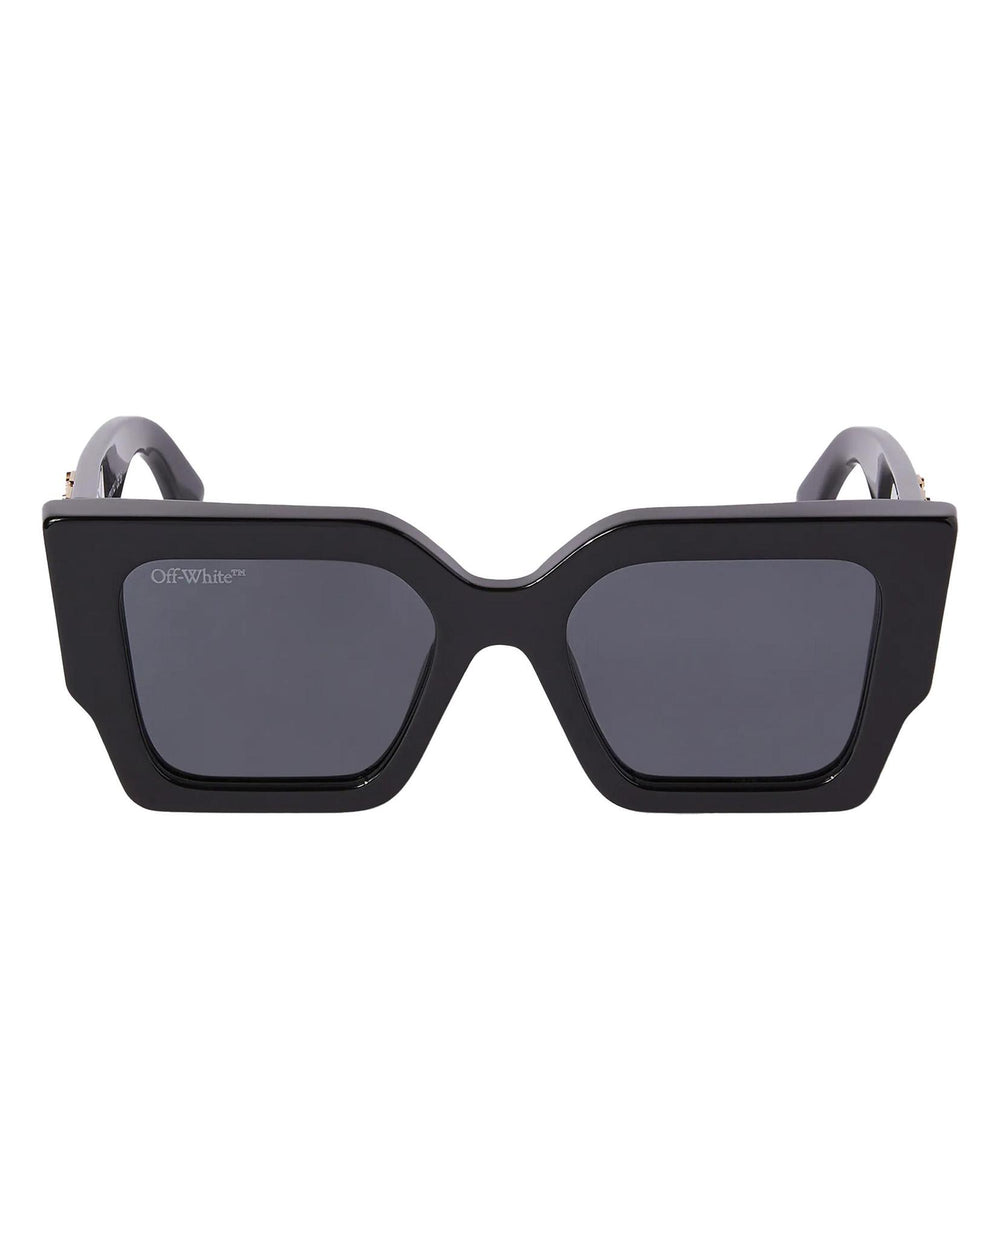 Virgil Gray Marble Sunglasses